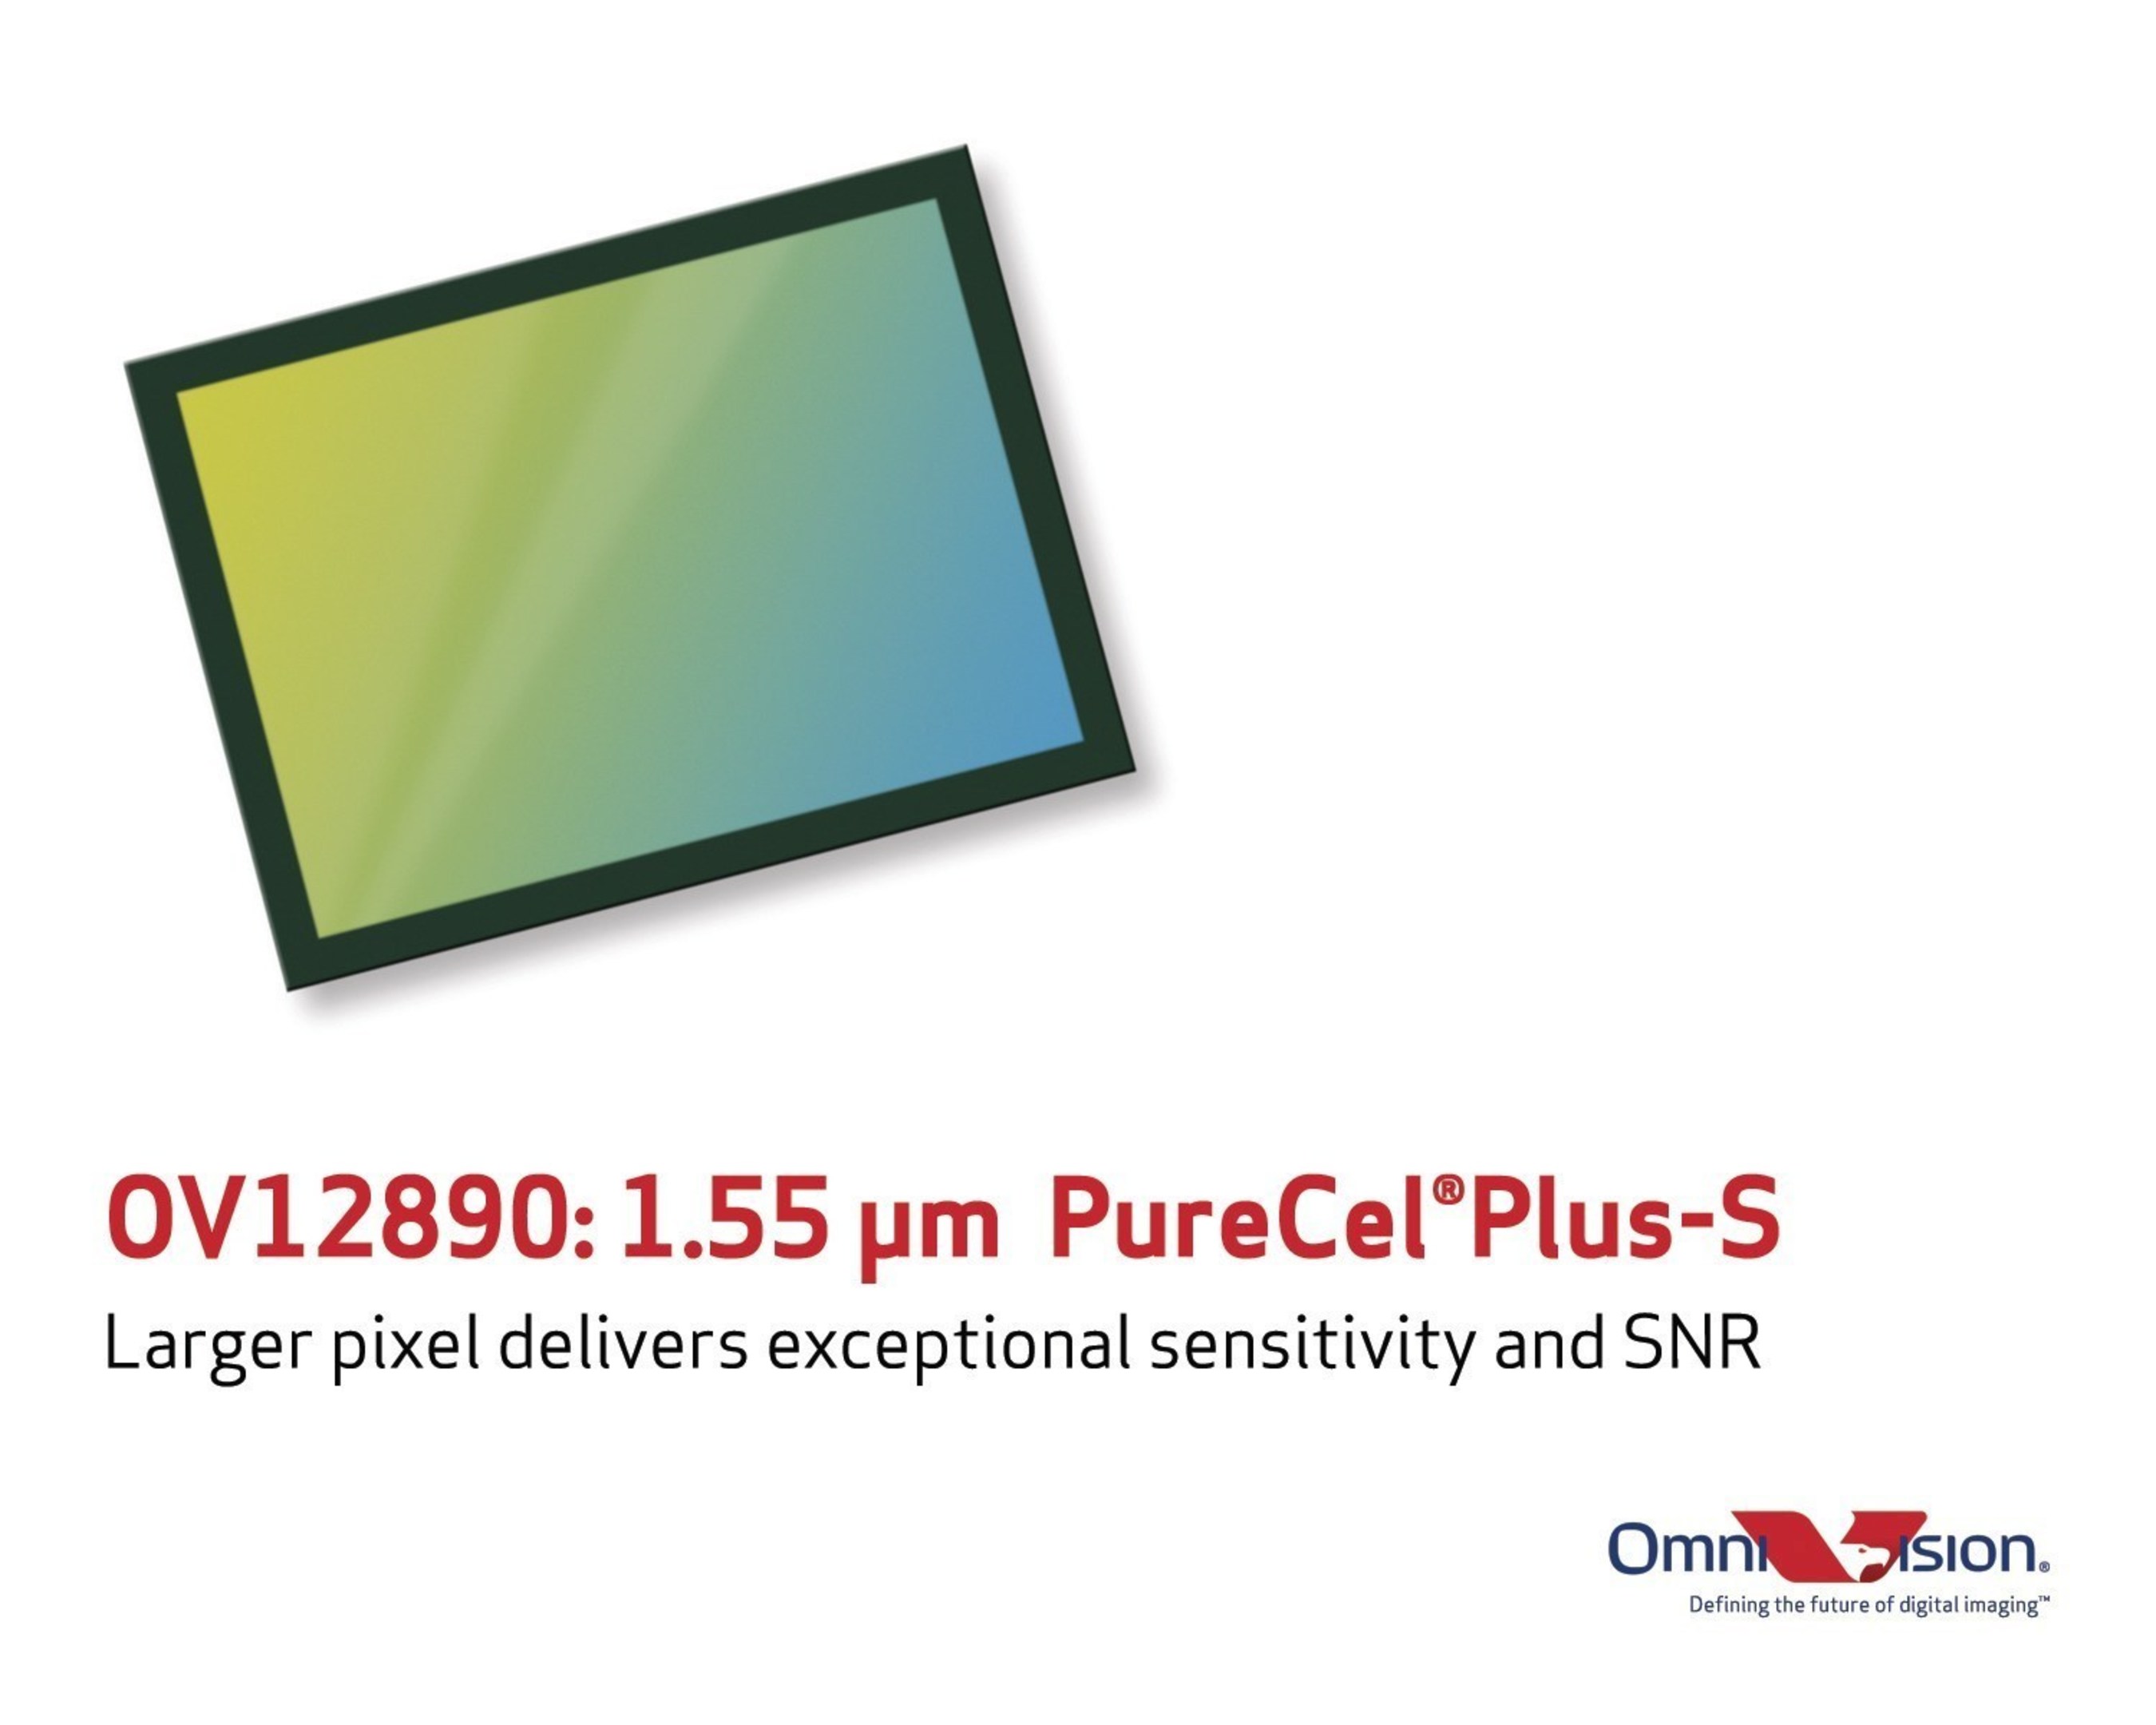 OmniVision's OV12890 PureCel(R)Plus-S sensor